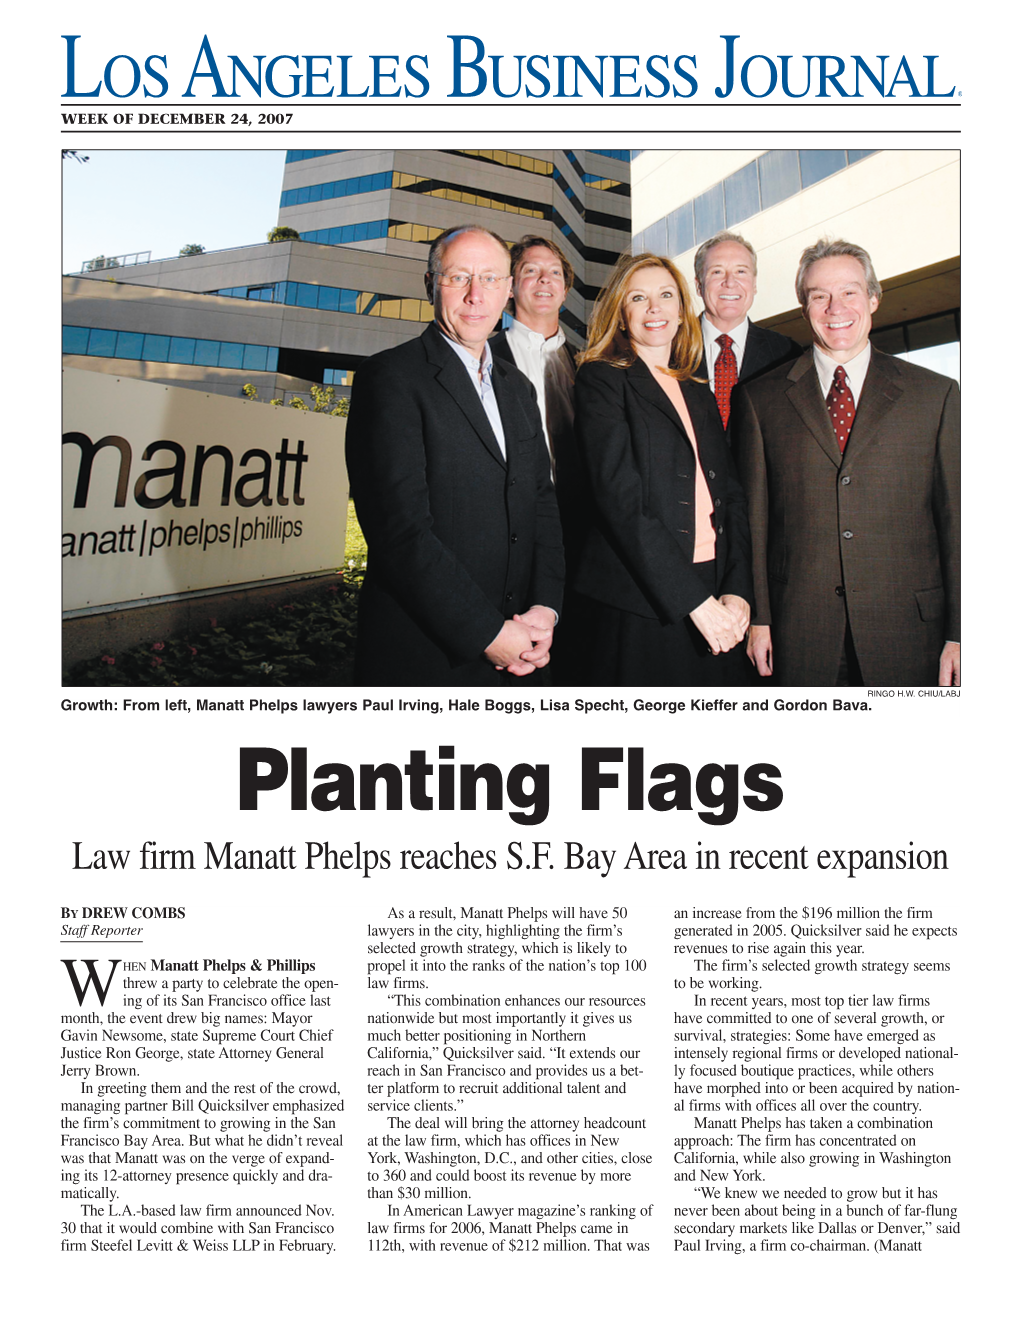 Planting Flags Law Firm Manatt Phelps Reaches S.F